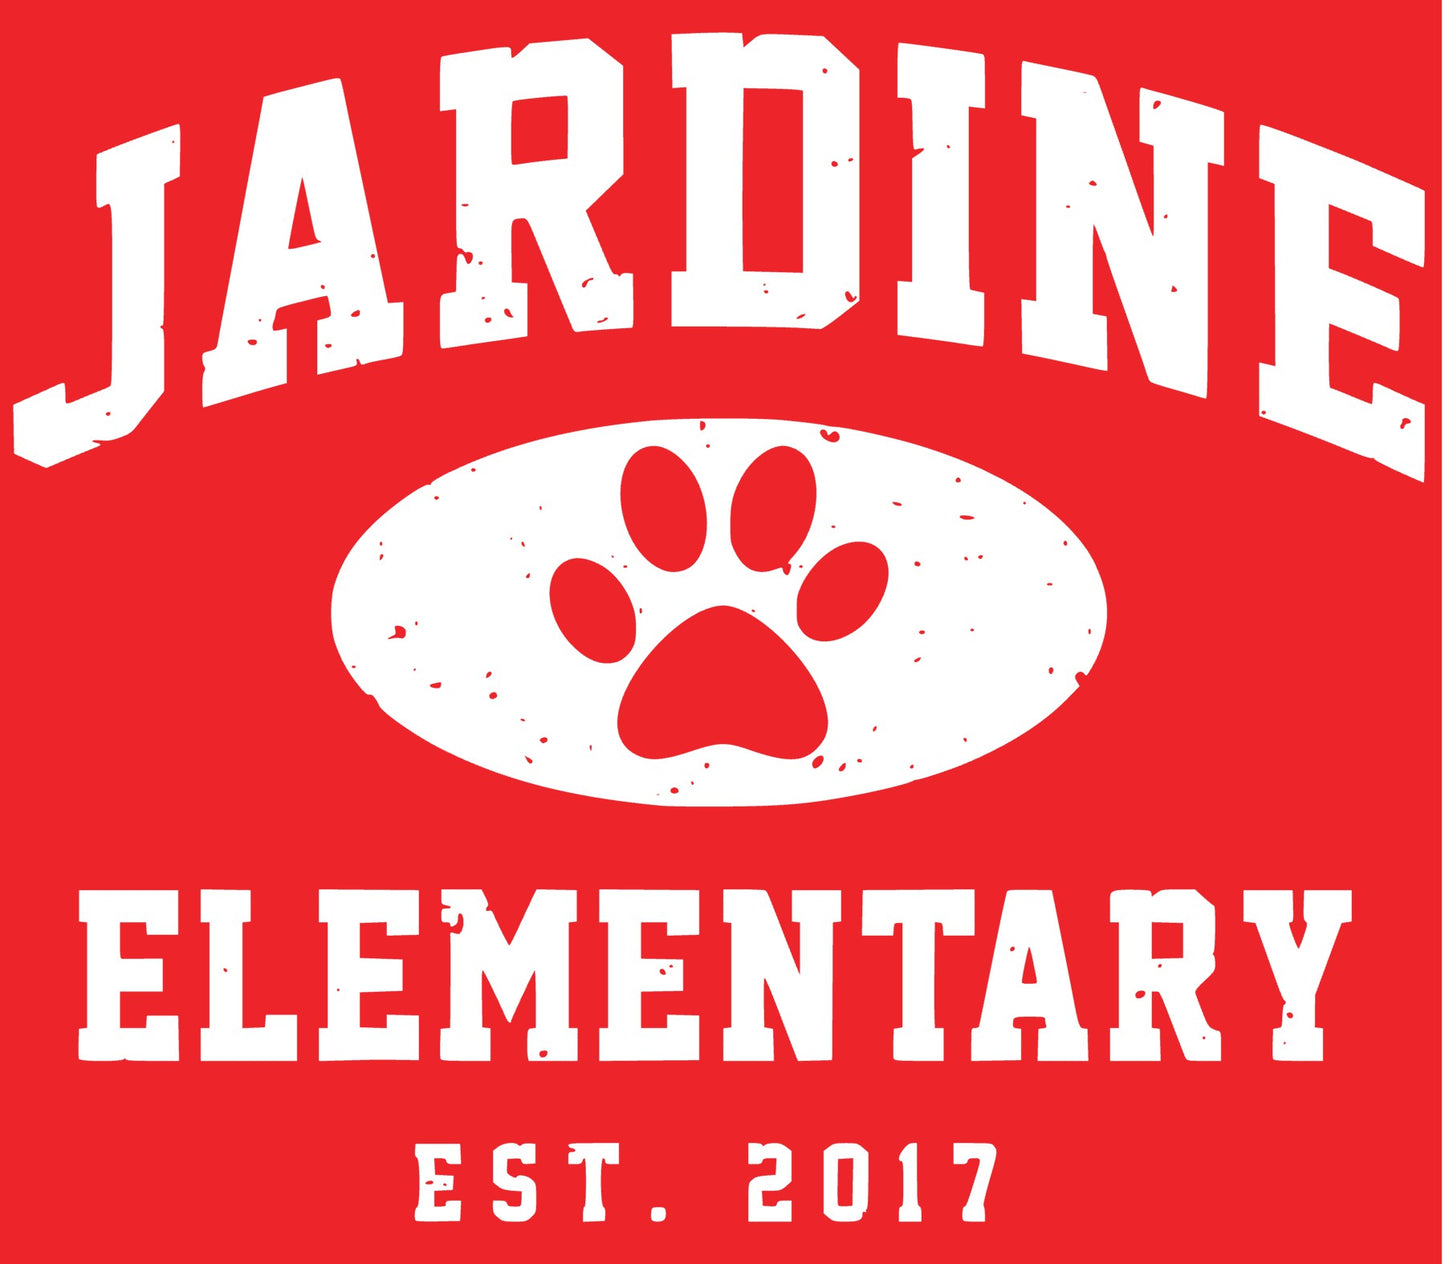 Jardine Official  - Jardine Elementary PTO Fundraiser